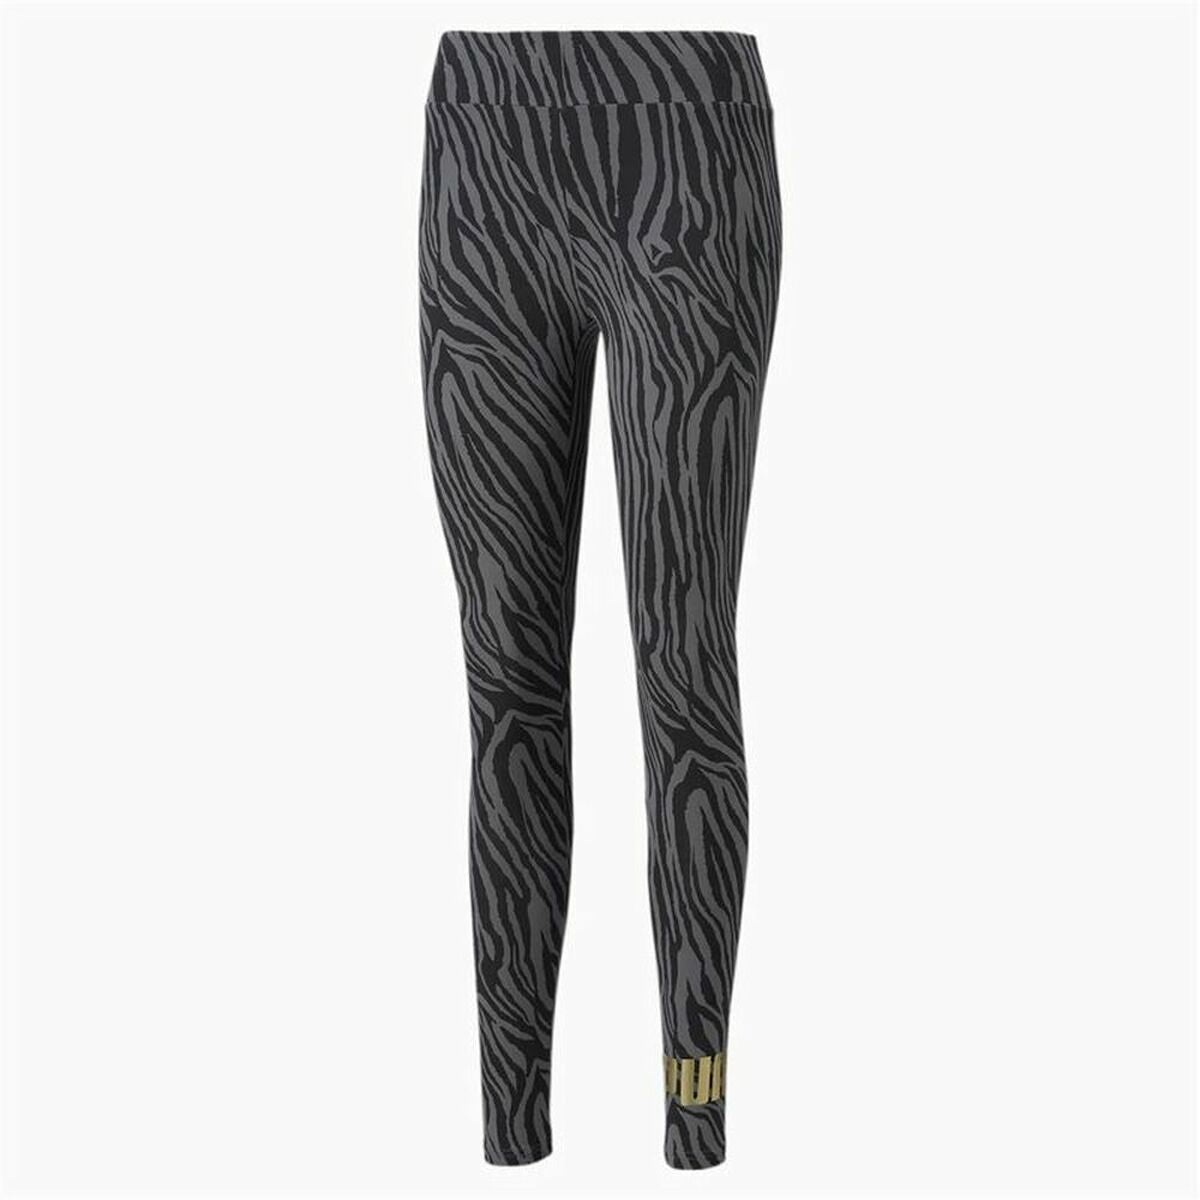 Sport leggings for Women Puma Essentials+ Tiger Dark grey